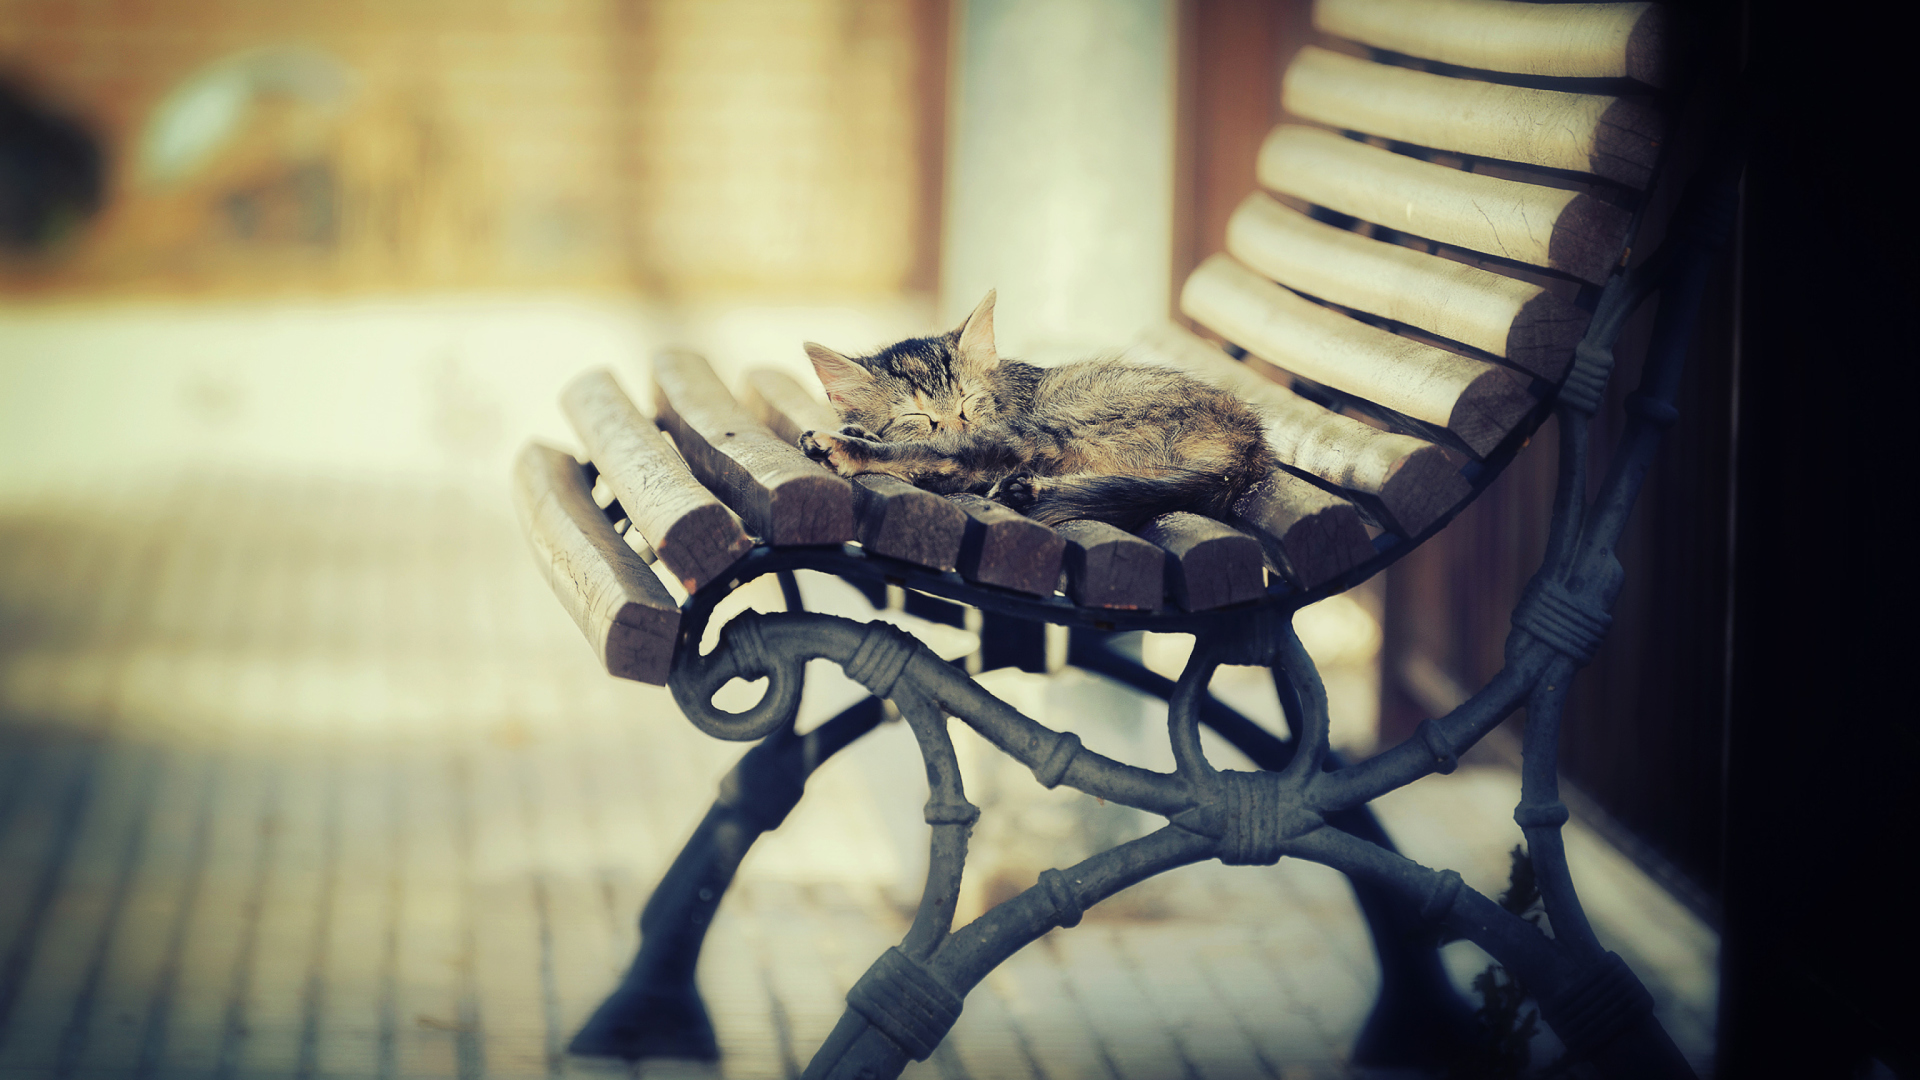 Обои Cat Sleeping On Bench 1920x1080